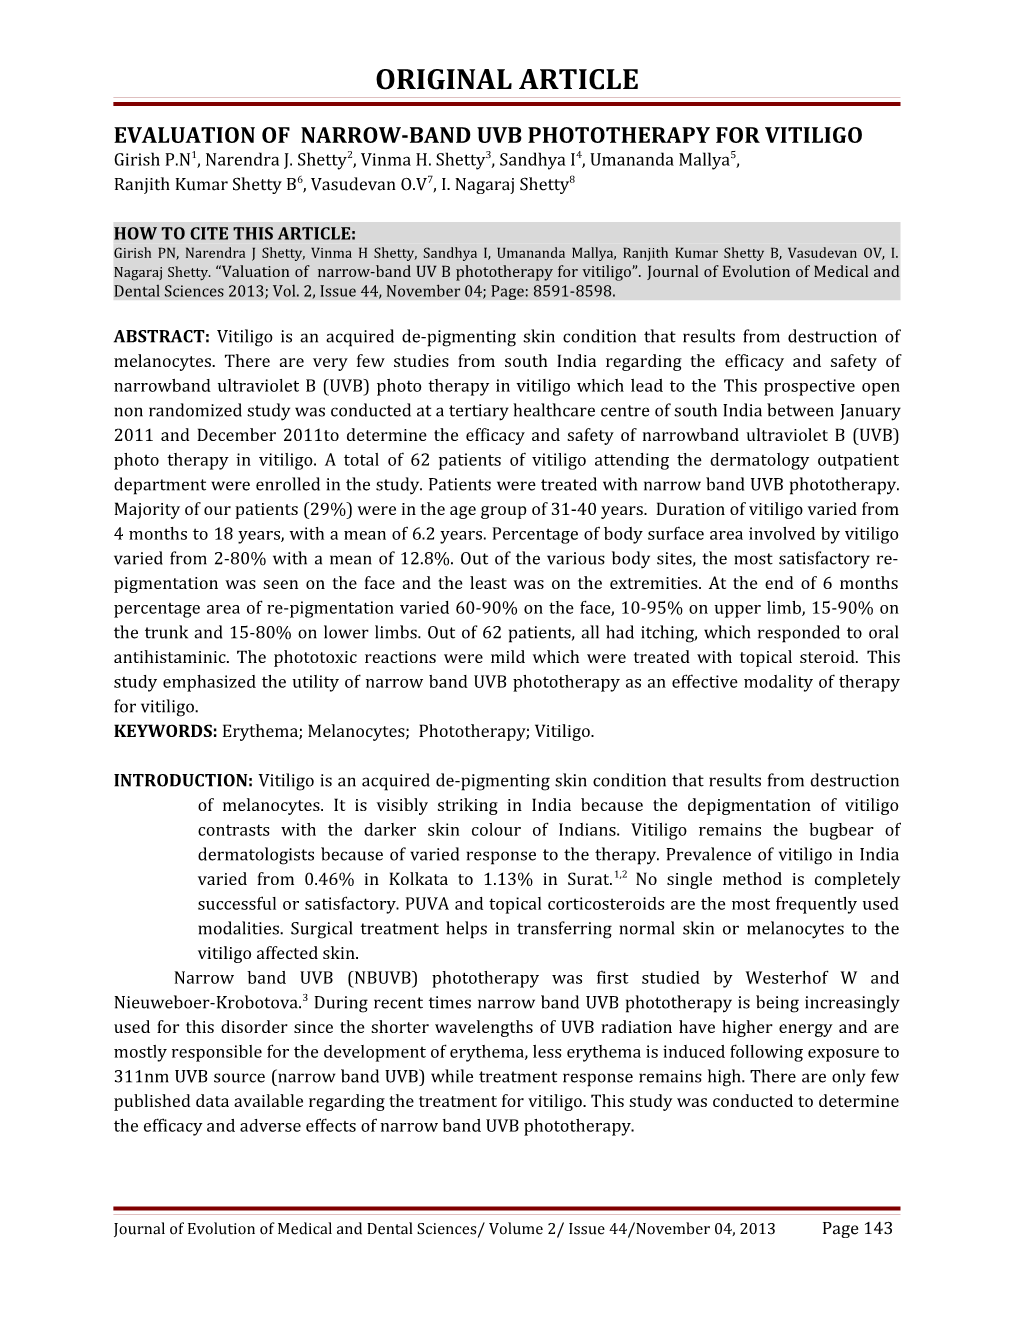 Evaluation of Narrow-Band Uvb Phototherapy for Vitiligo